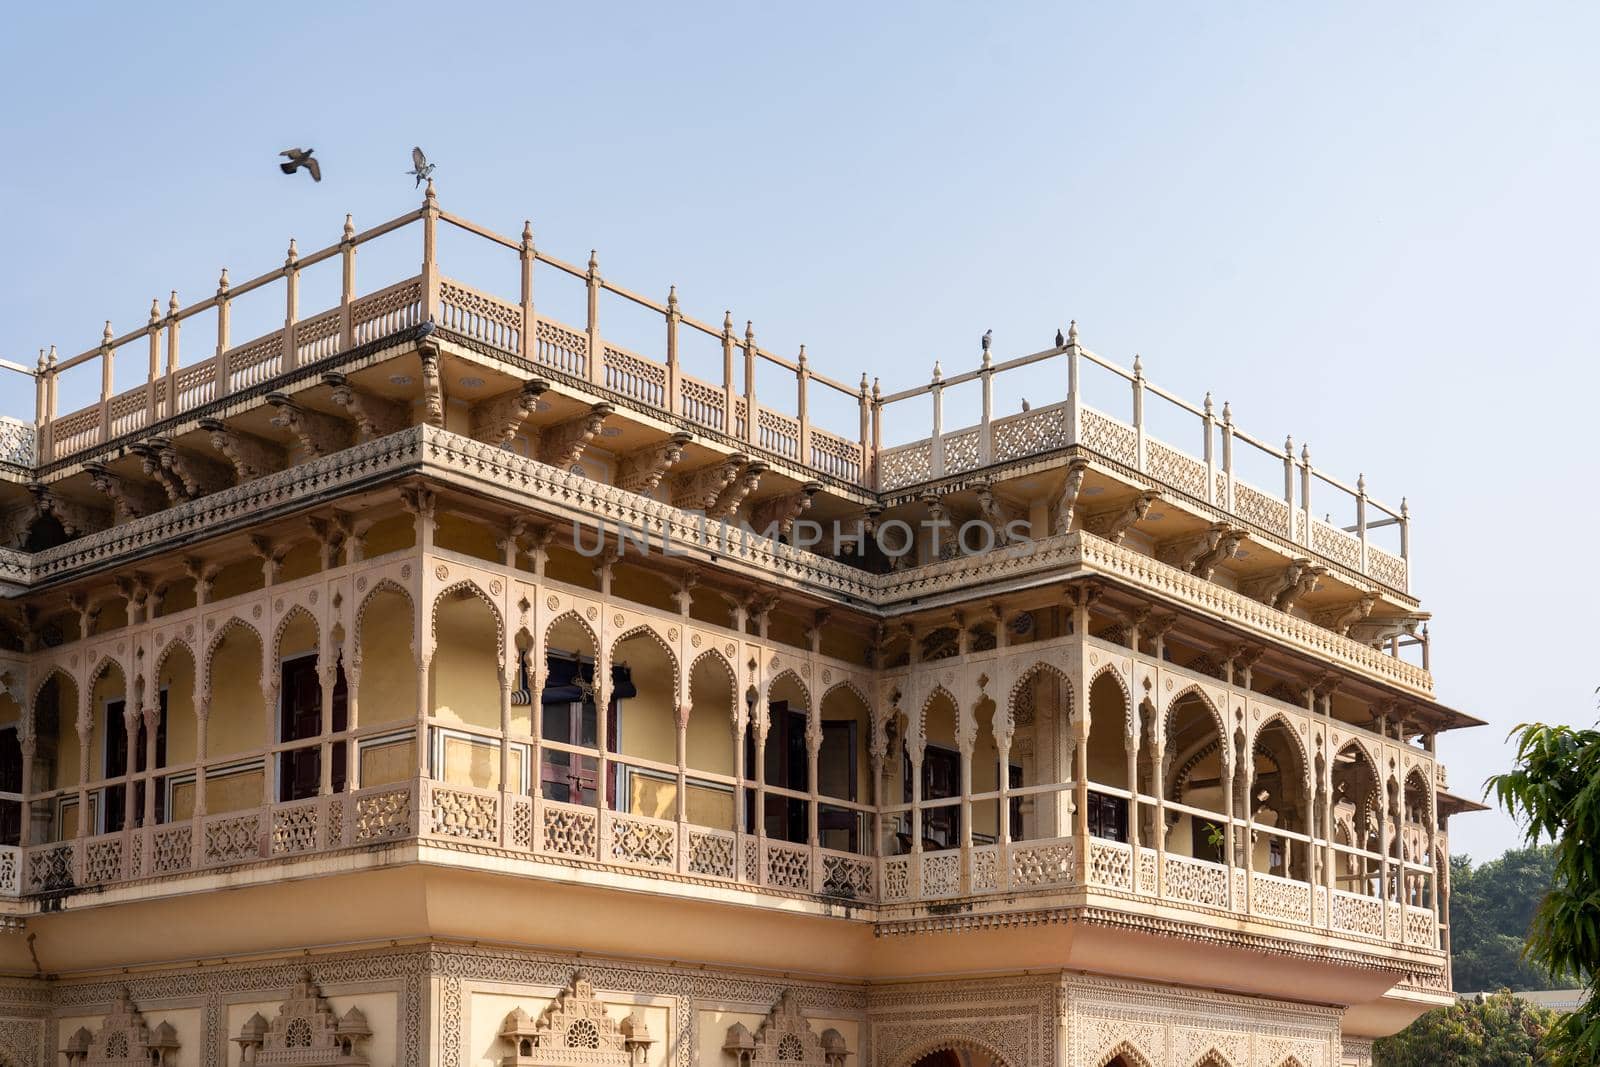 Jaipur, India - December 11, 2019: Mubarak Mahal Palace at the City Palace.